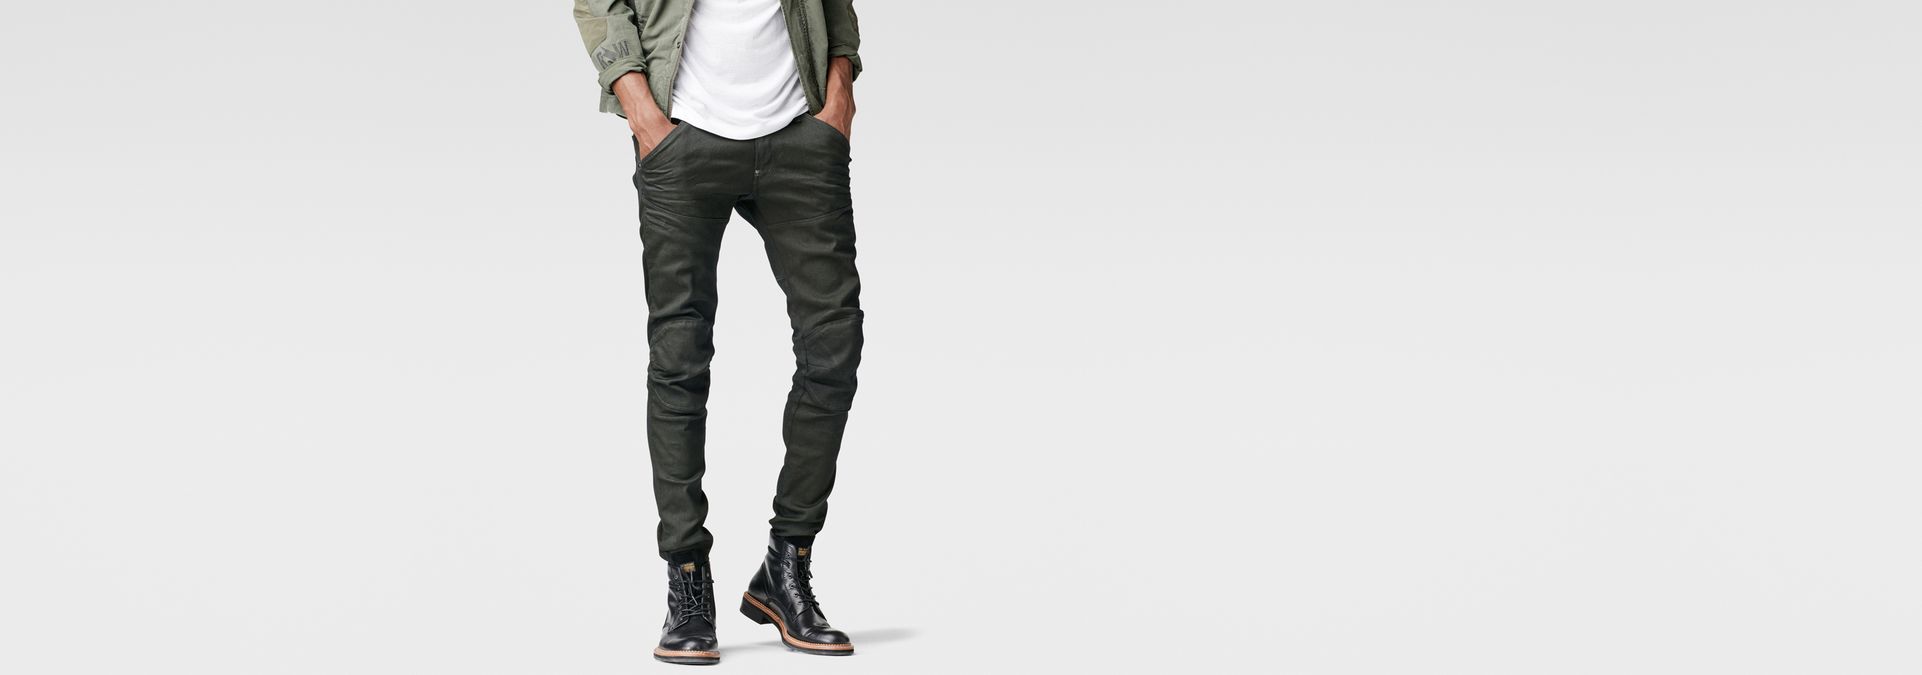 G-Star RAW 5620 3d Ankle Zip Super Slim Jeans for Men